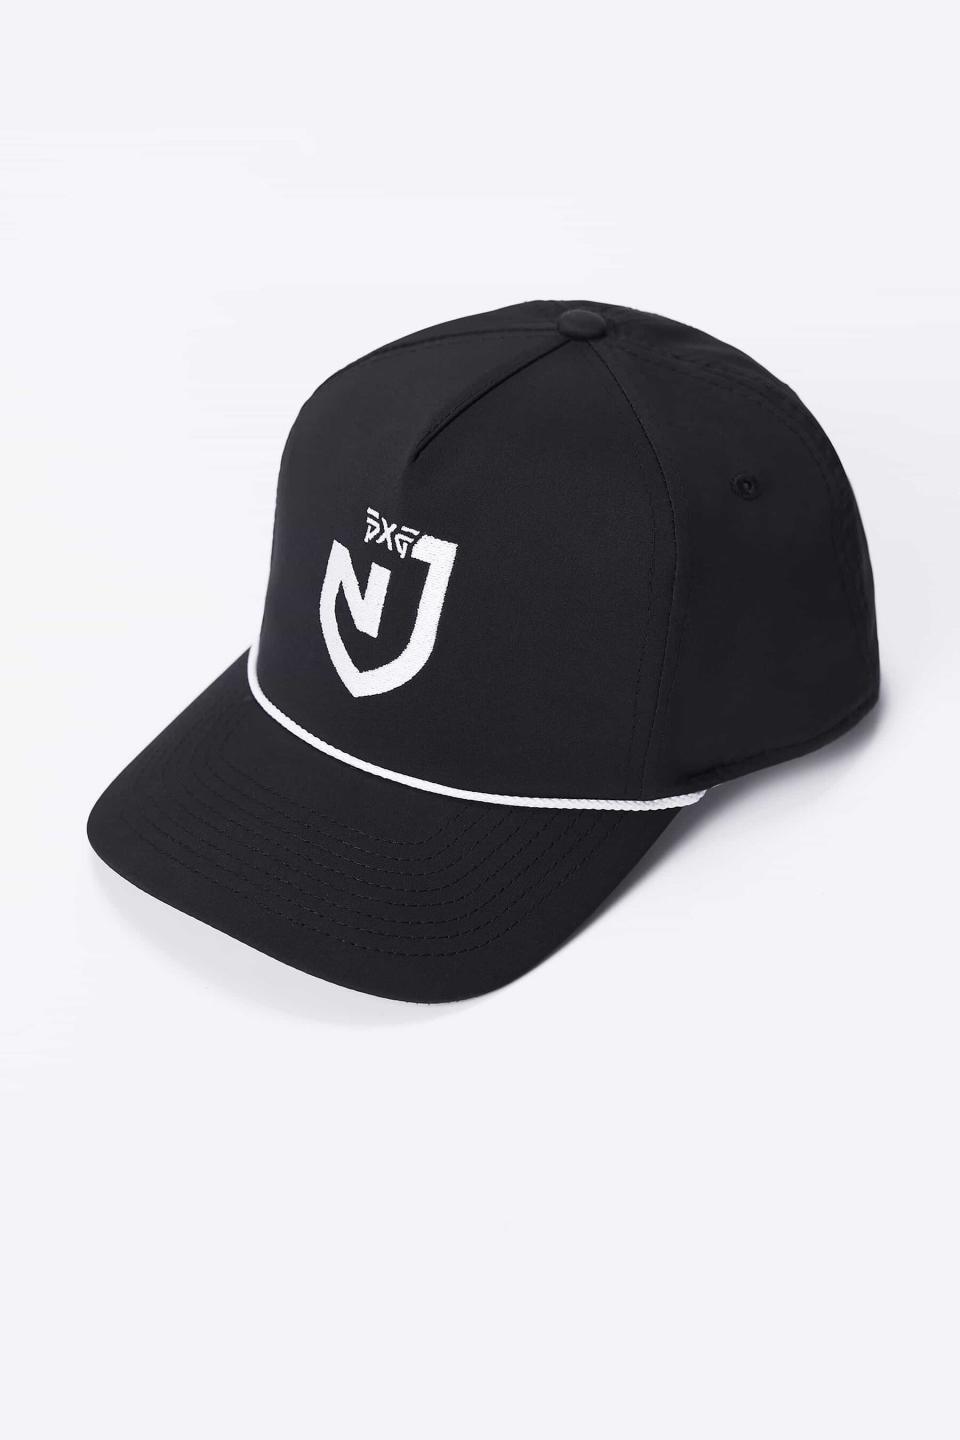 PXG x NJ Hat - Black